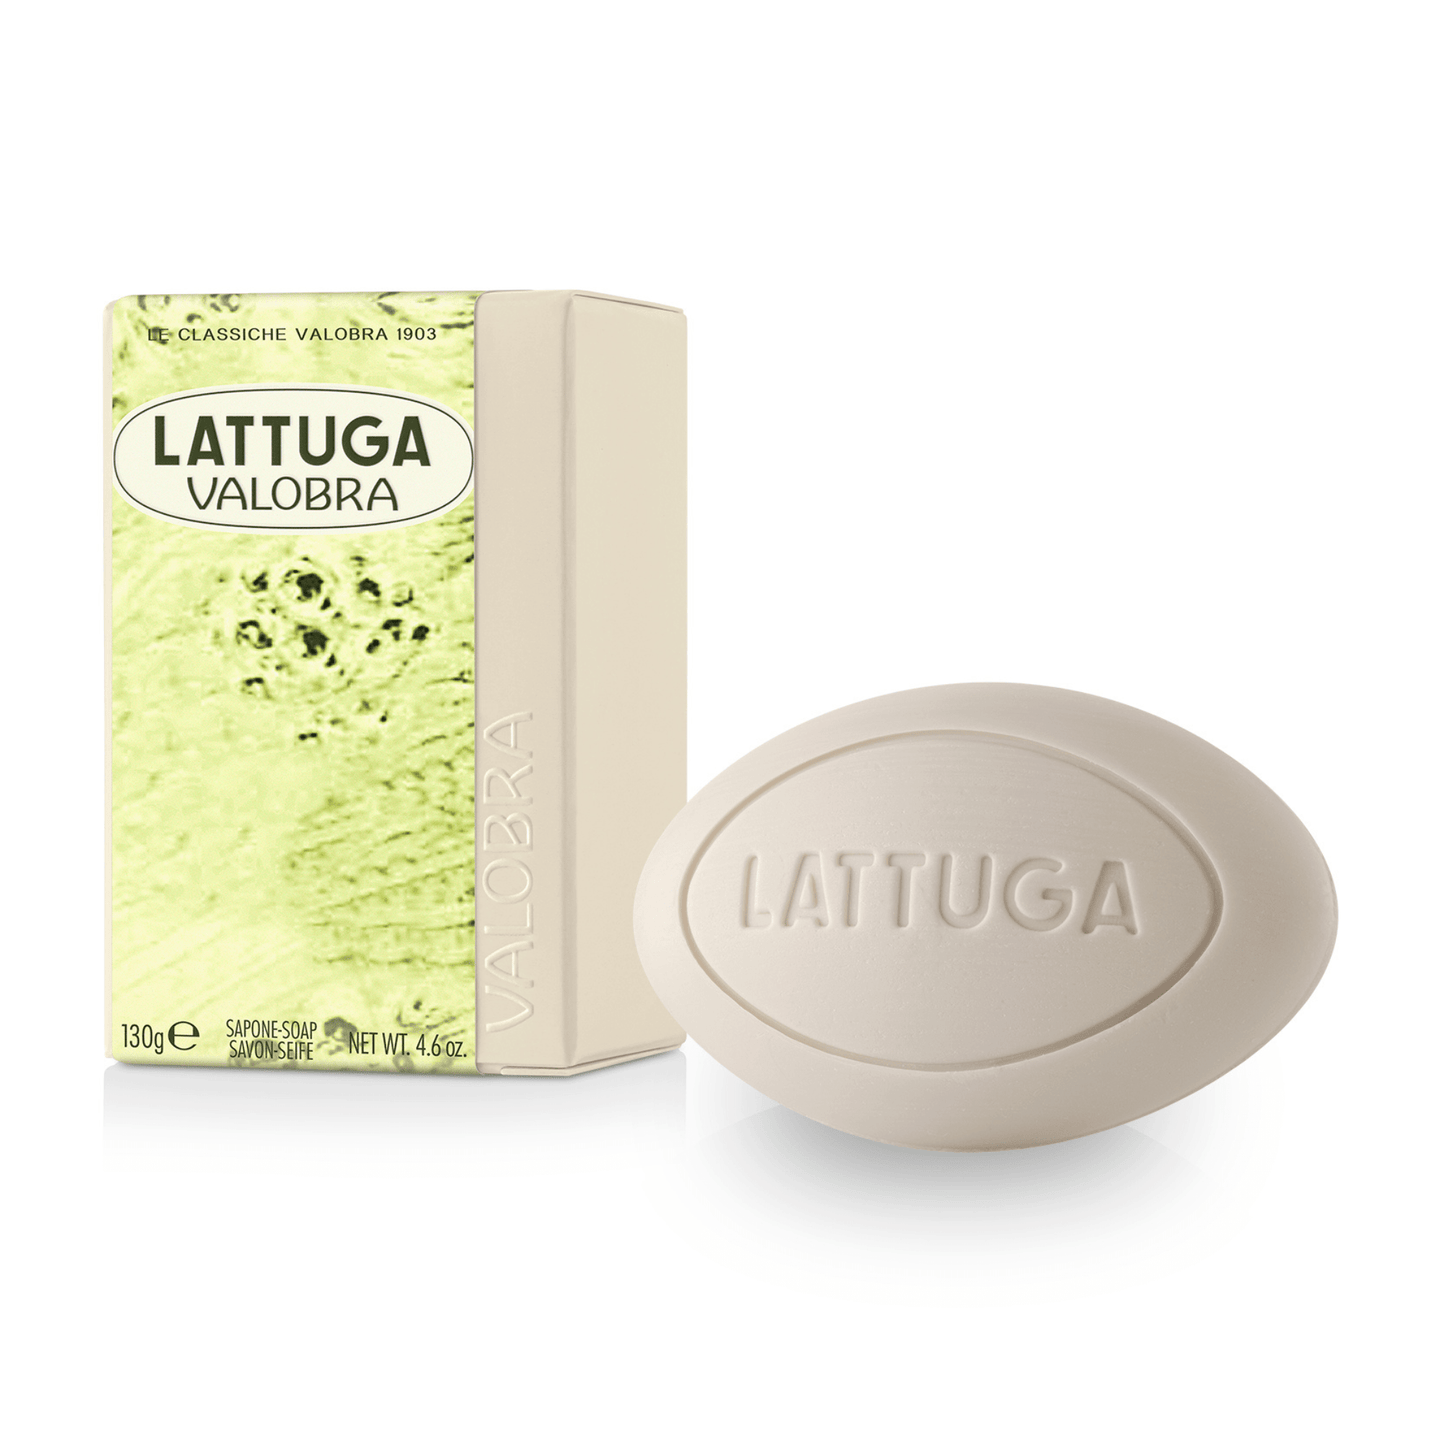 Primary Image of Lattuga Soap